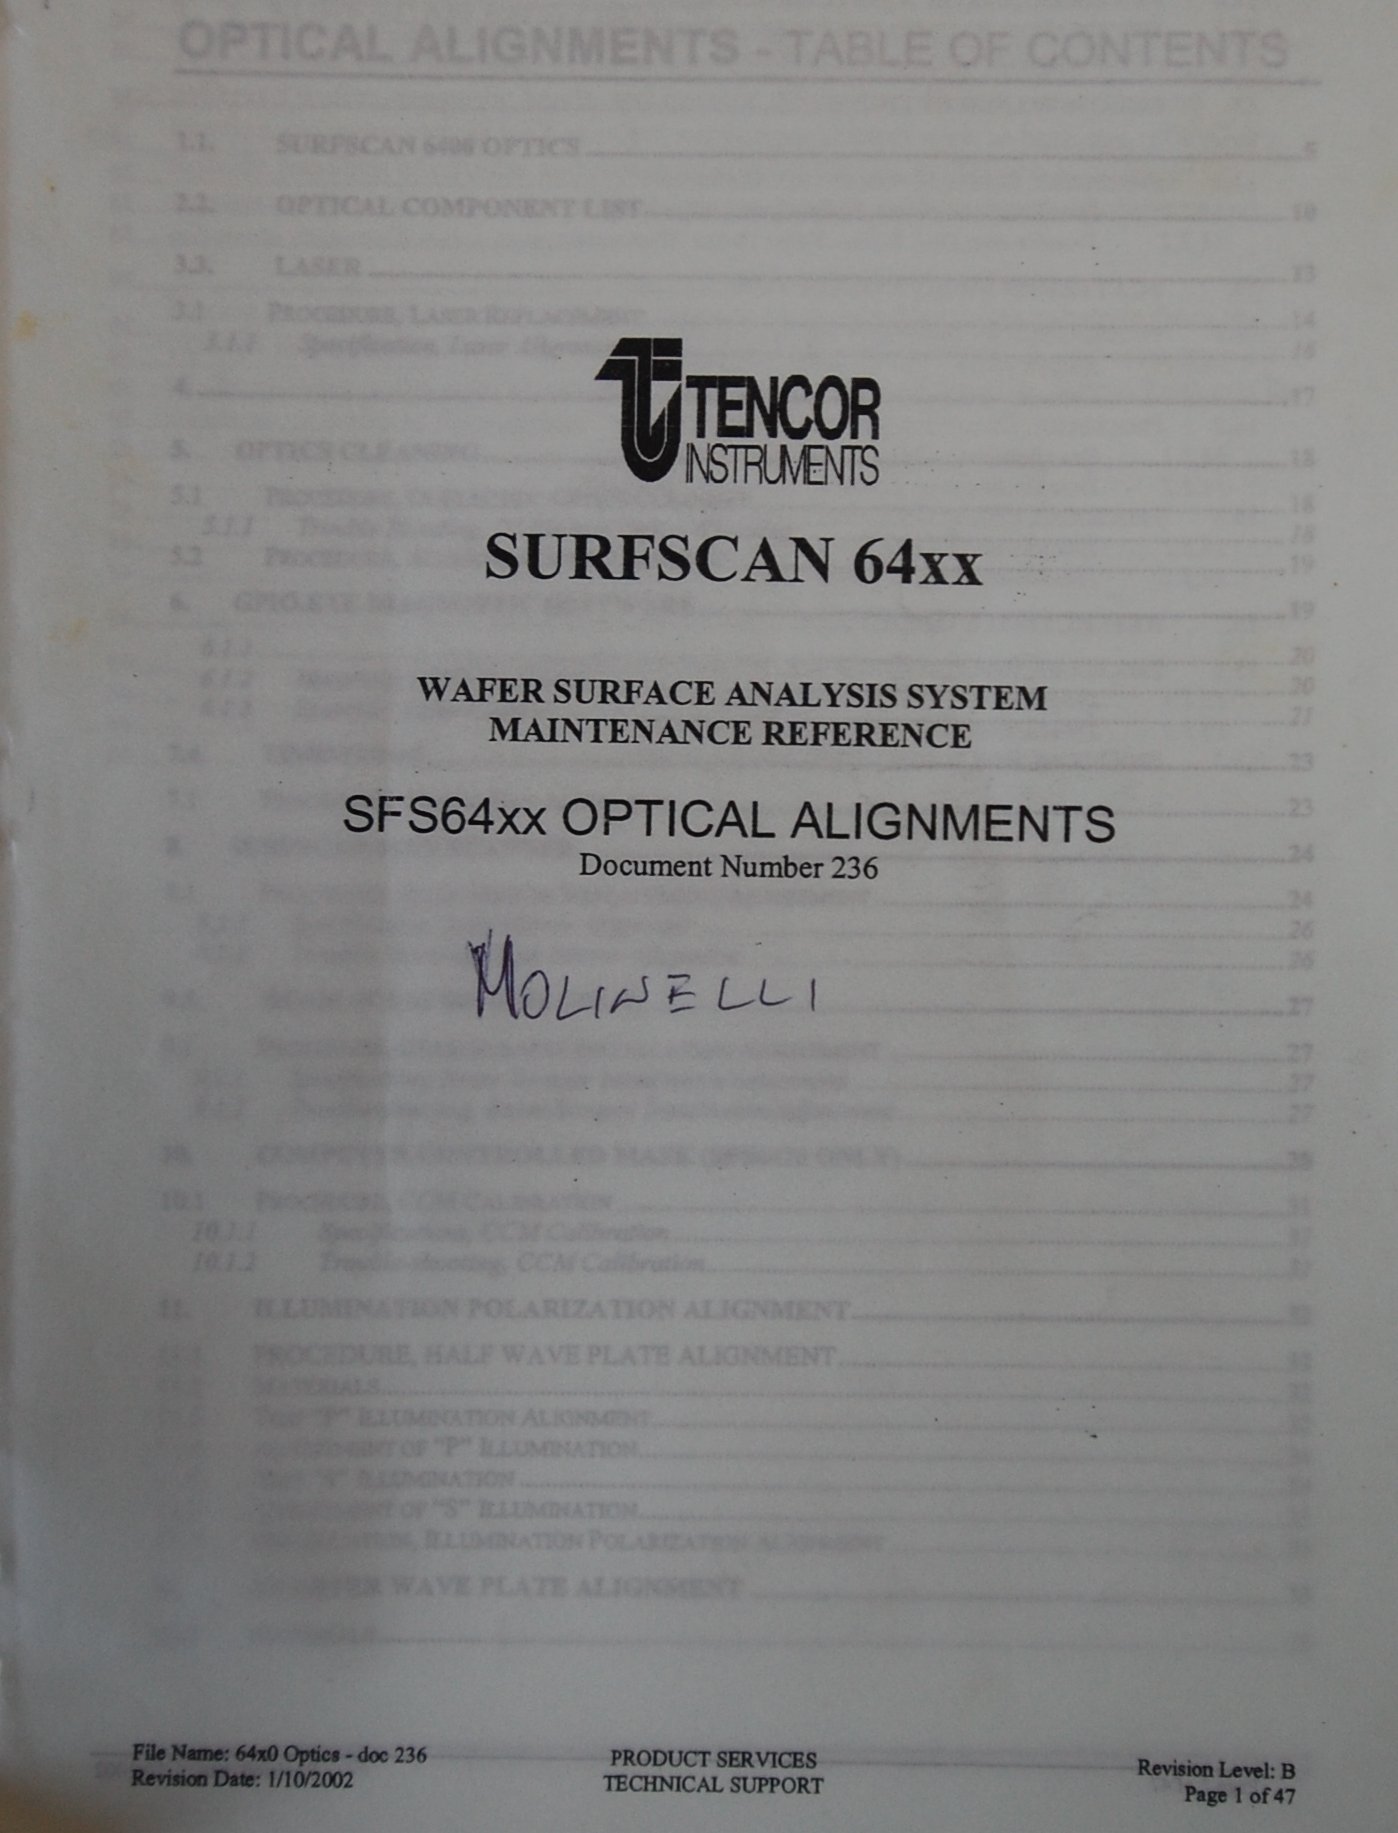 KLA TENCOR surfscan 64XX optical alignments Document Number 236